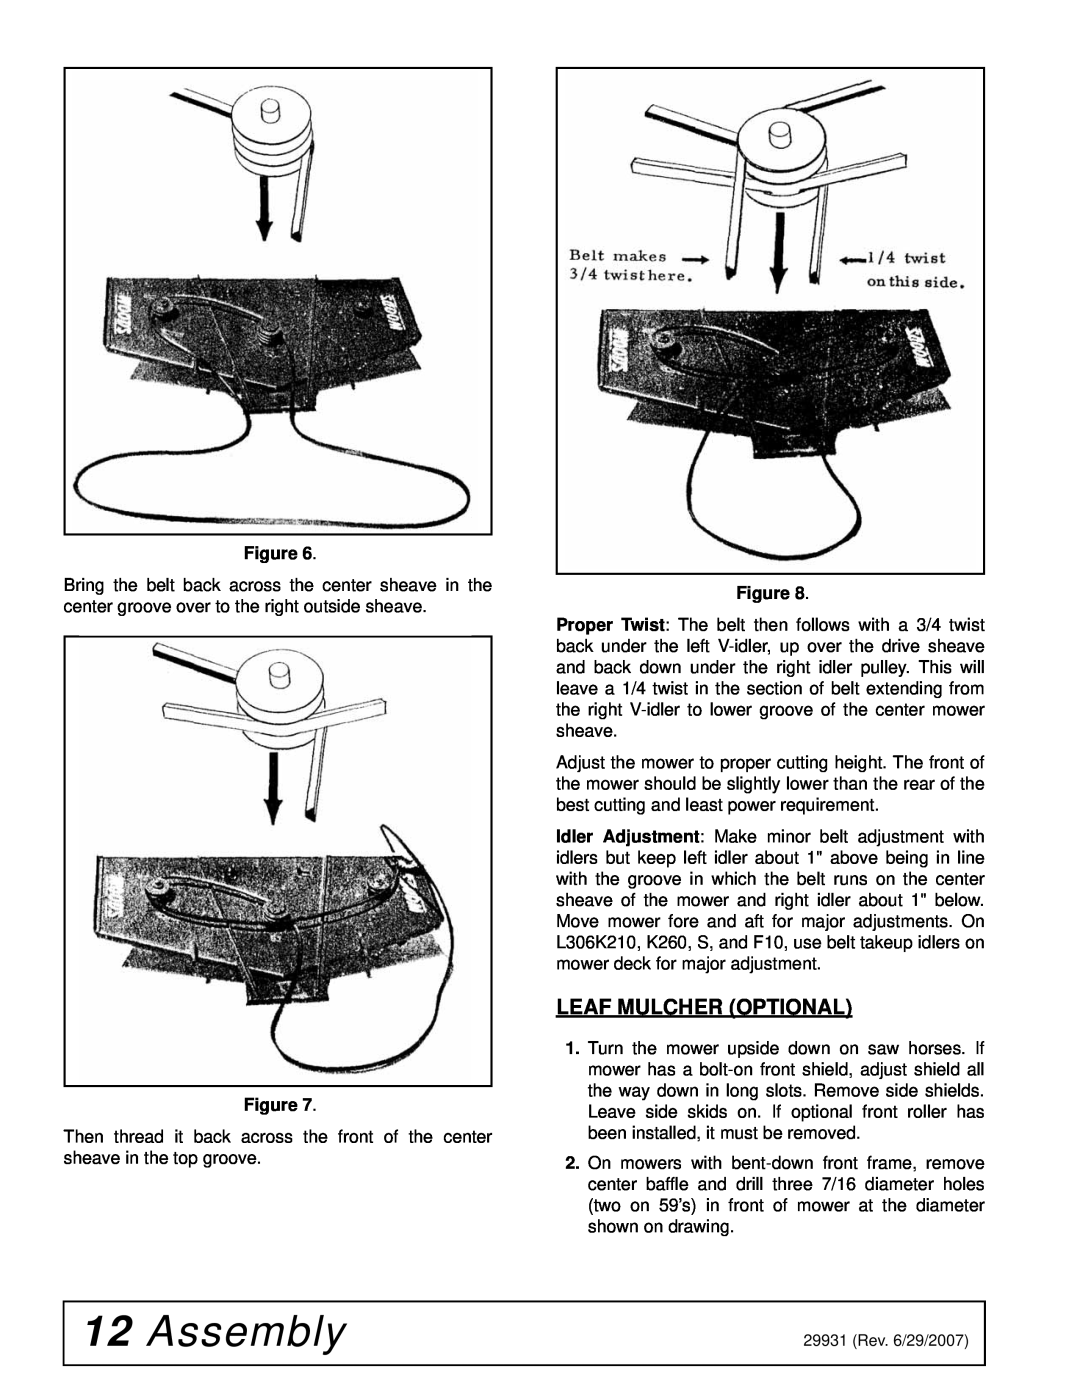 Woods Equipment 59HC-1 manual Assembly, Leaf Mulcher Optional 